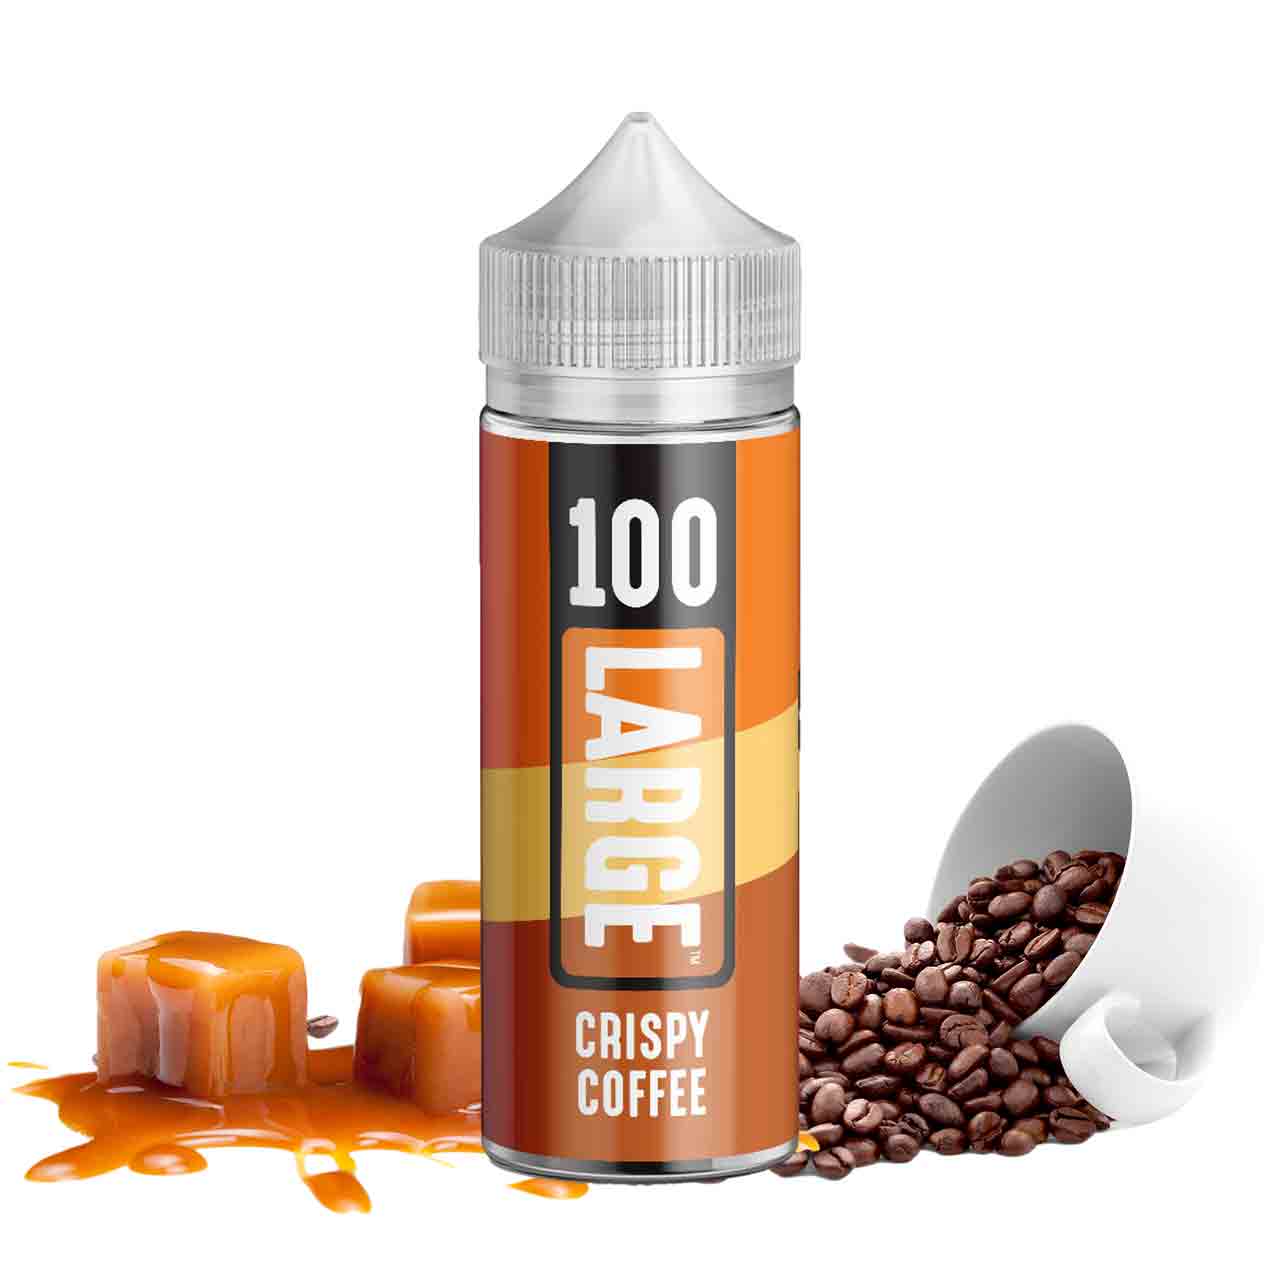 Large Juice 100 Crispy Coffee Aroma Longfill